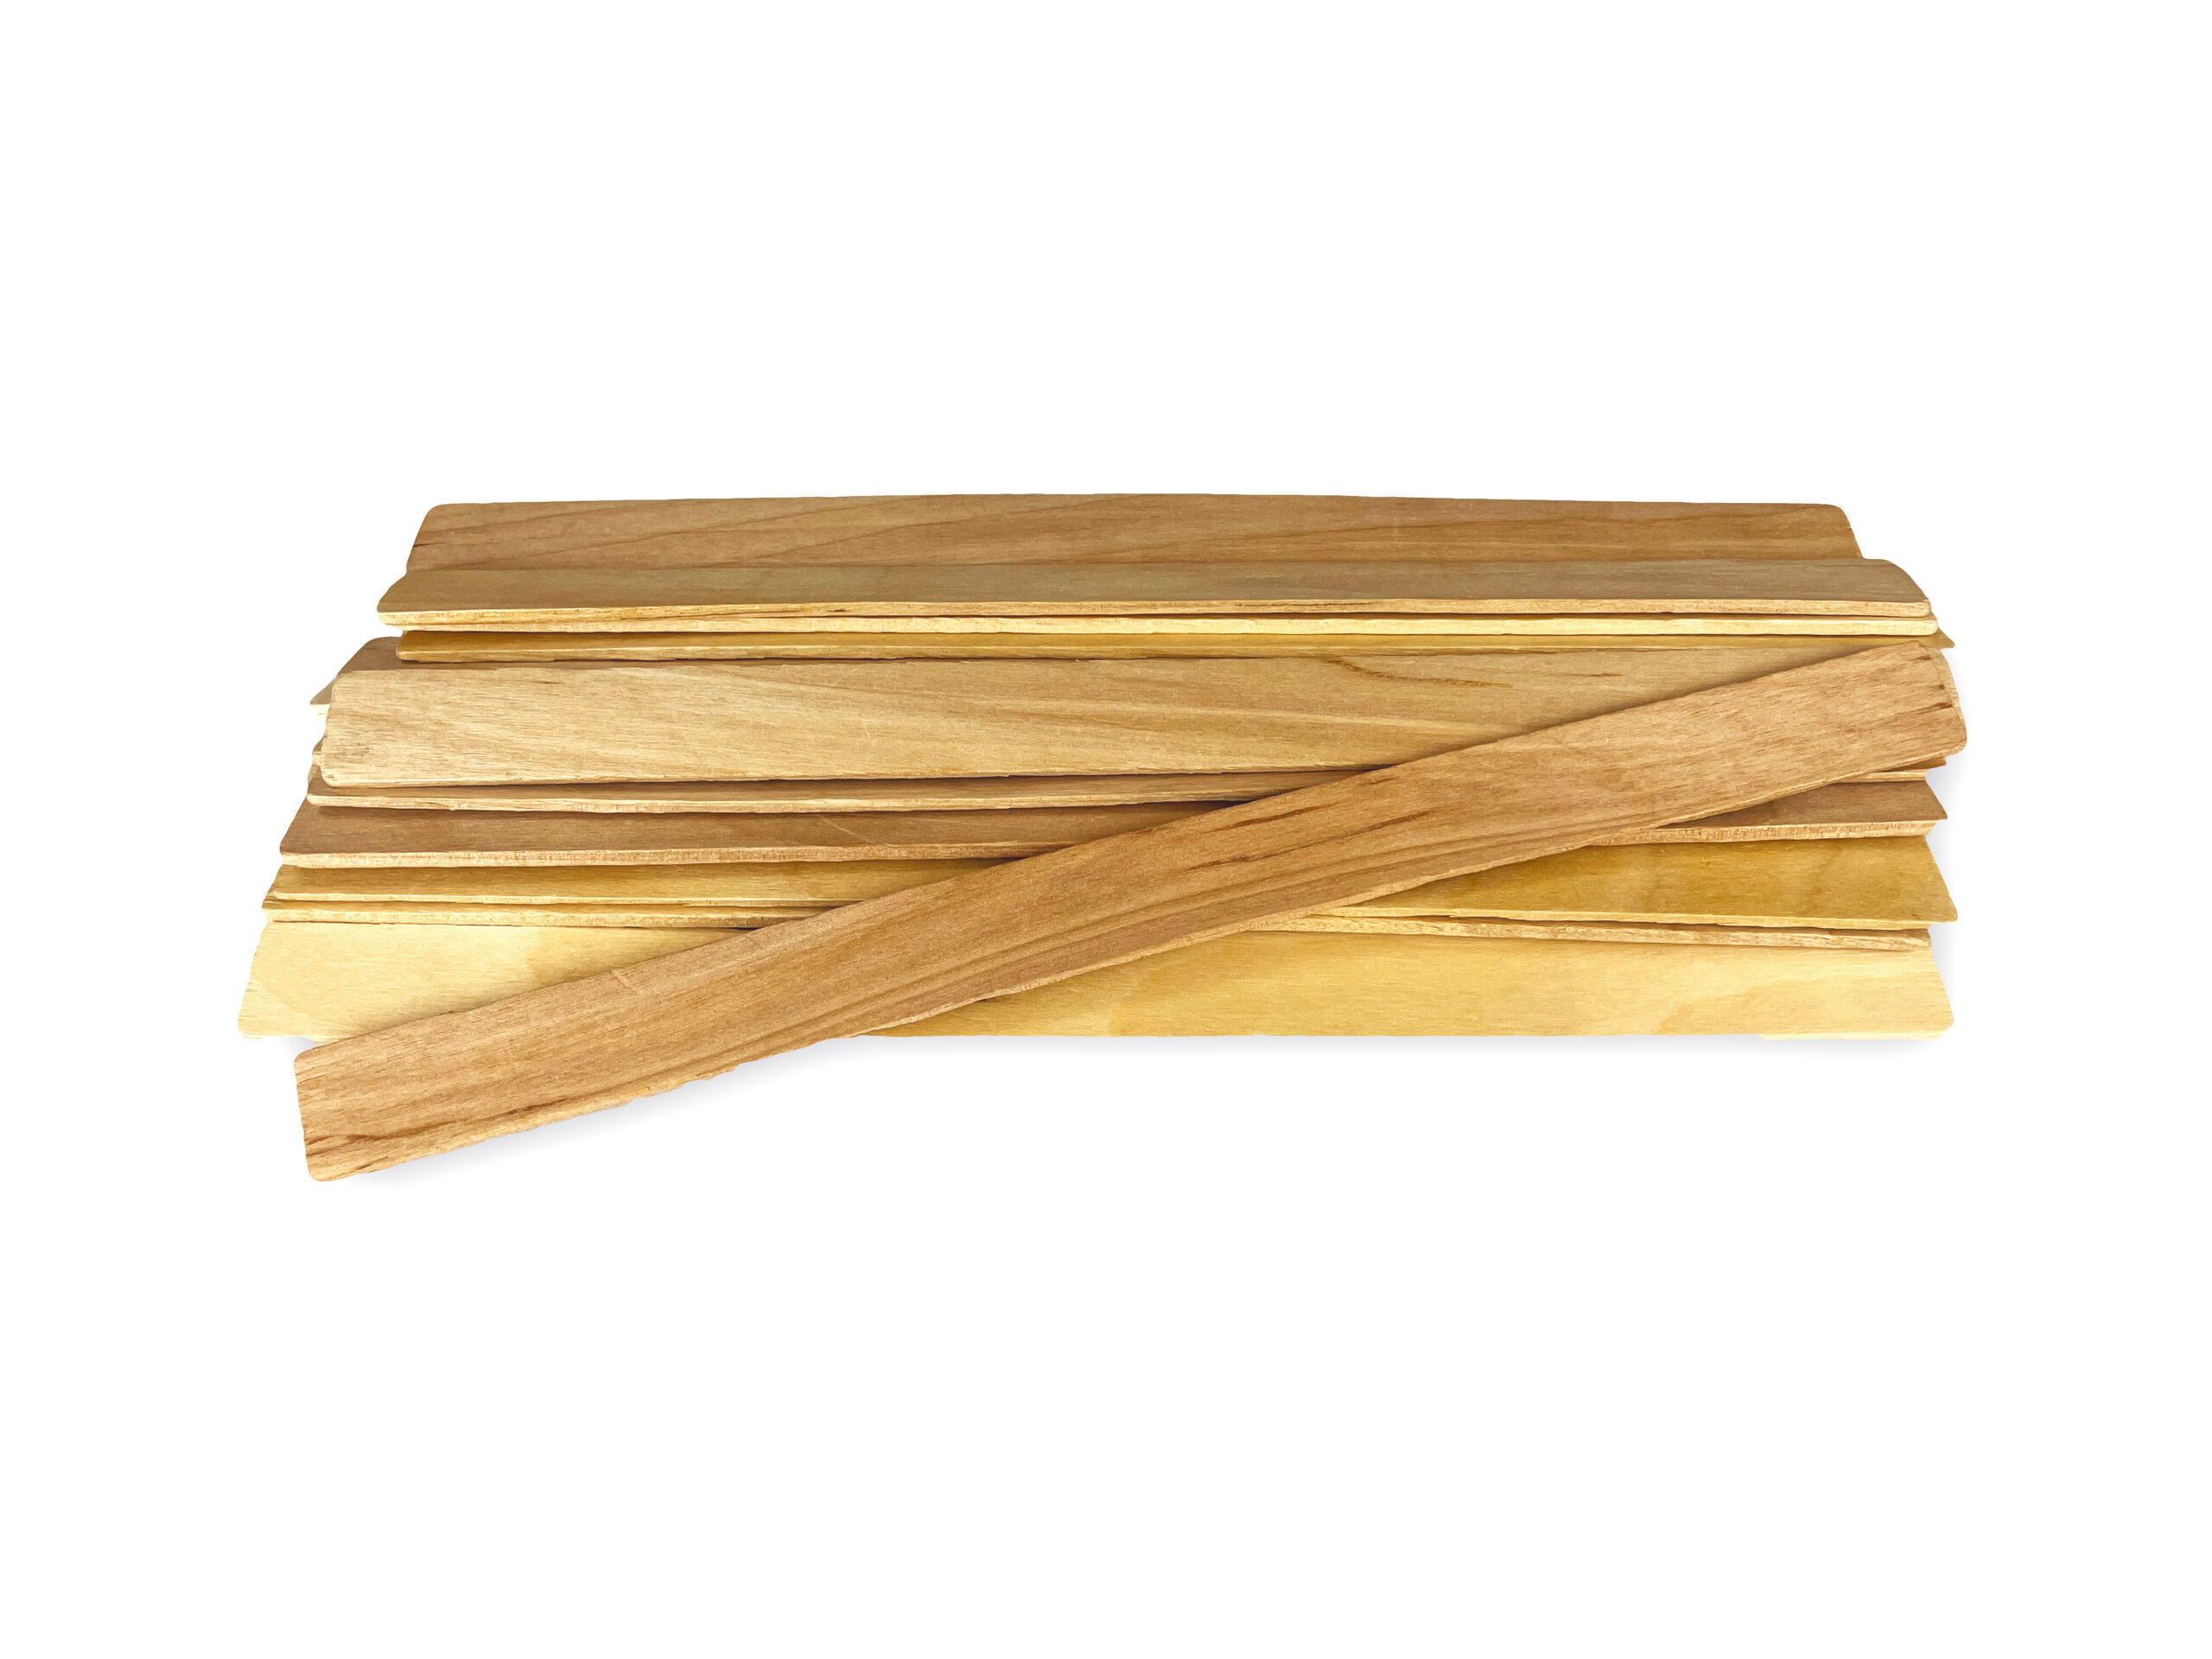 Large Wooden Stir Sticks - 25 ct